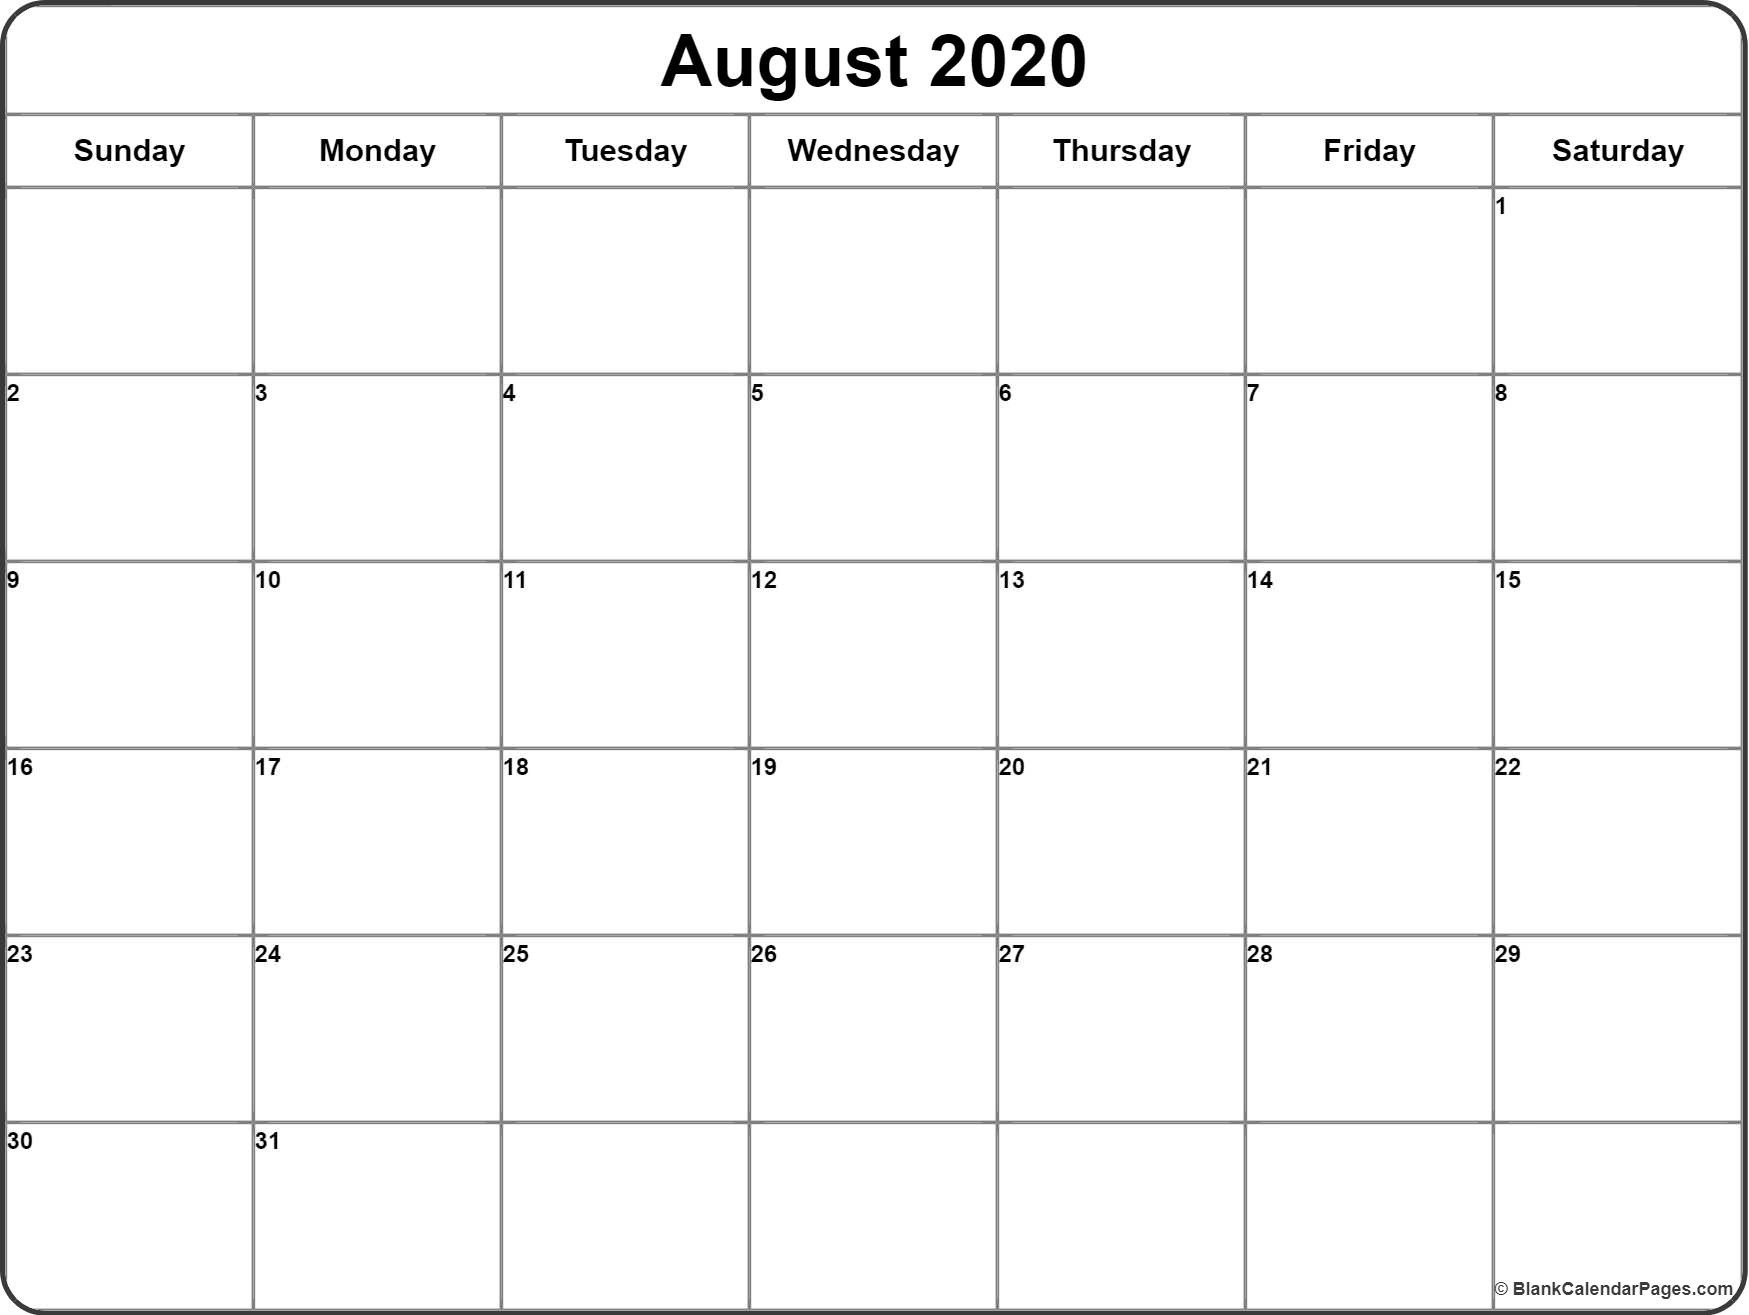 August 2020 Calendar | Free Printable Monthly Calendars-3 Month Blank Calendar June-August 2020